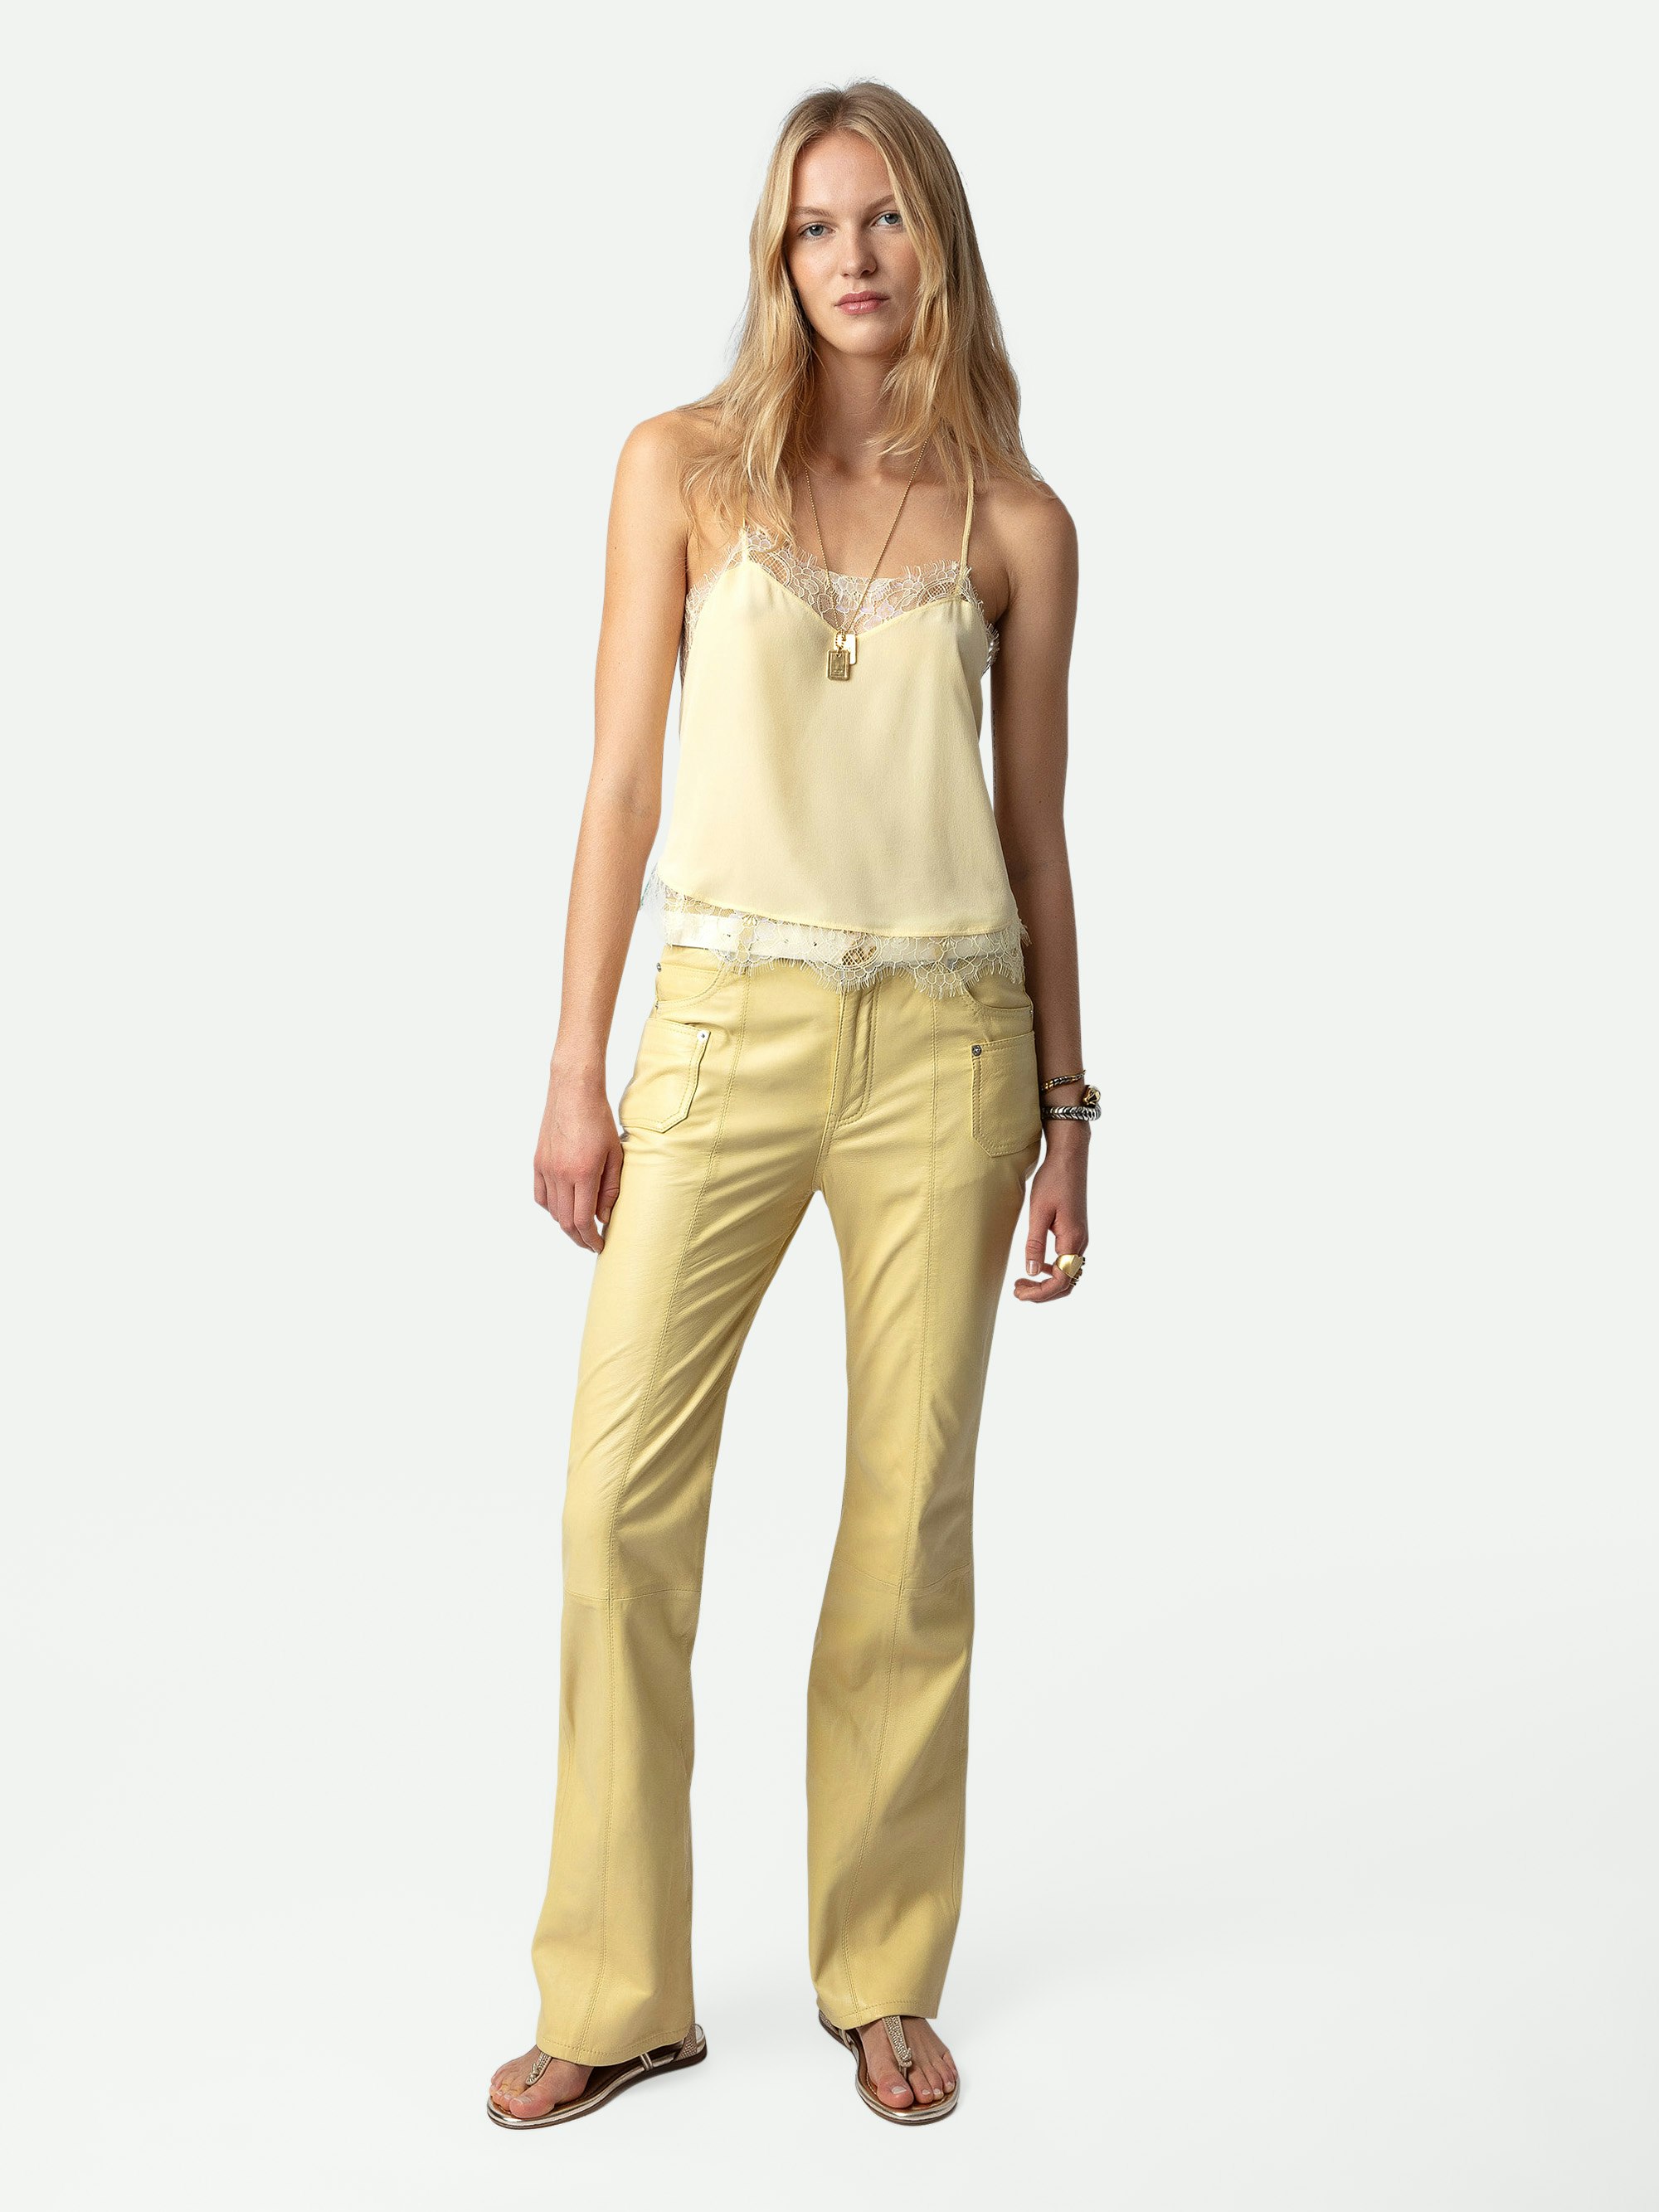 Pantaloni Elvir Pelle - Pantaloni in pelle liscia giallo chiaro con fondo svasato e tasche.